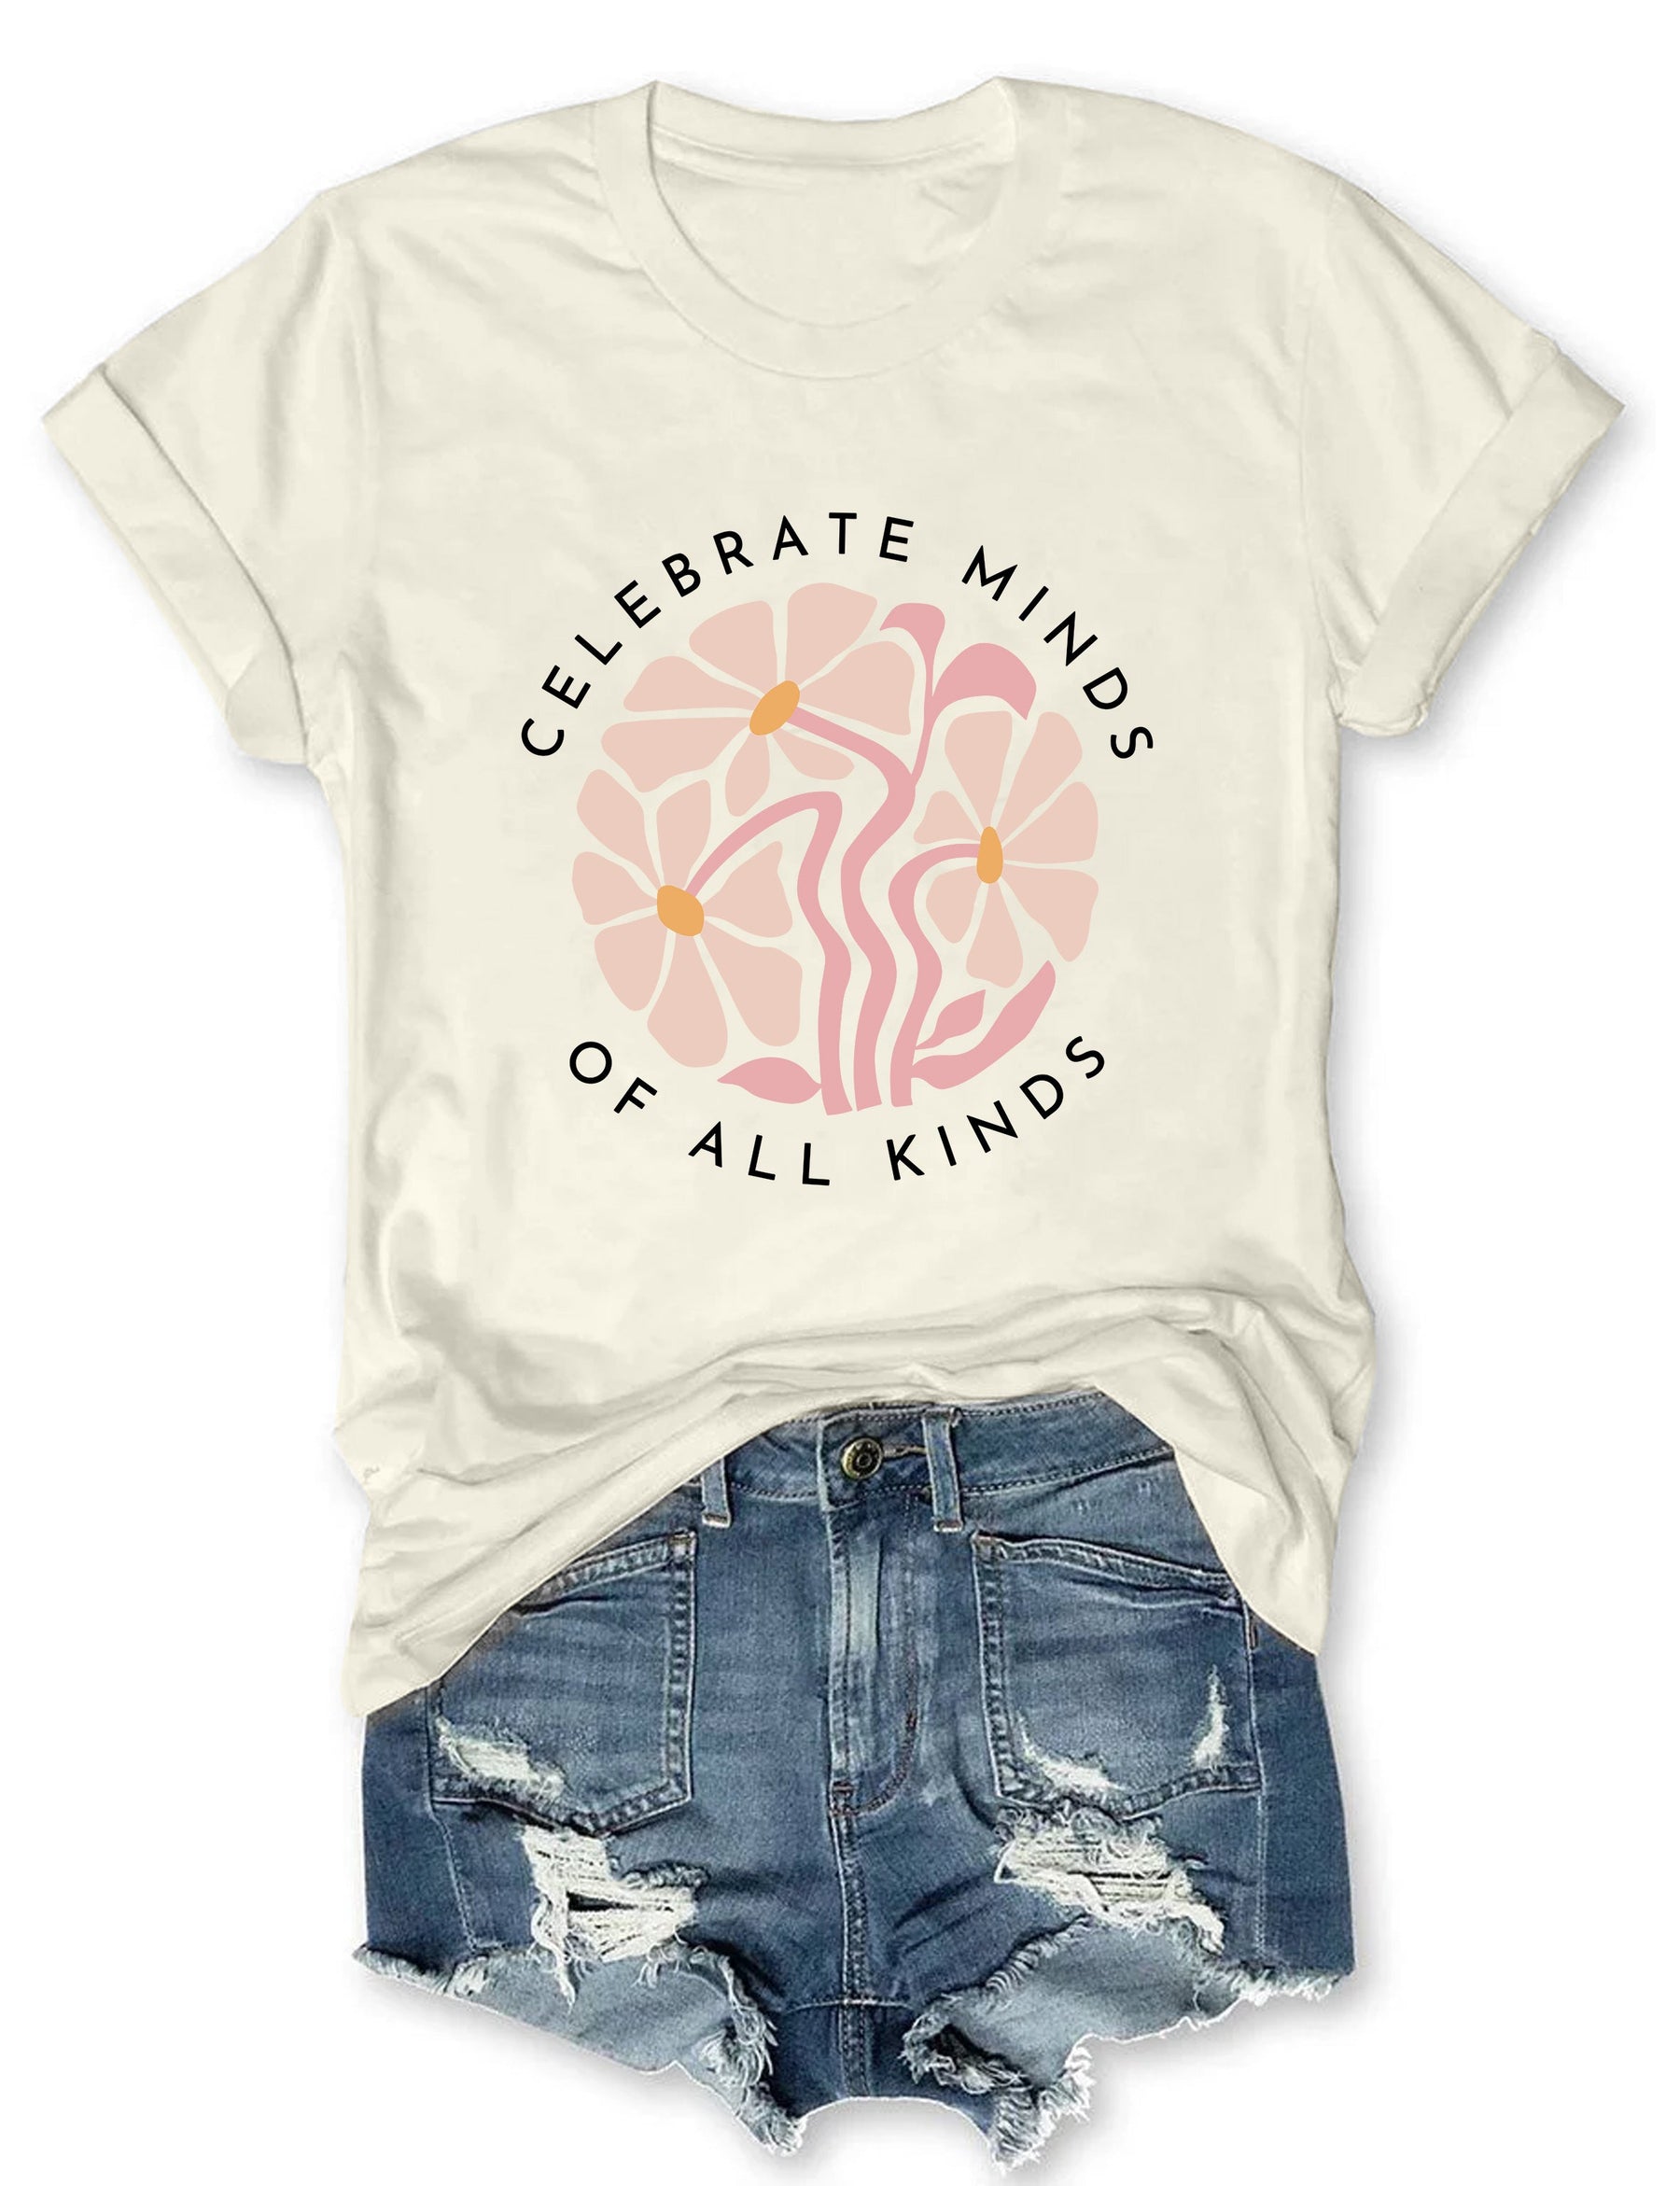 Celebrate Minds of All Kinds T-shirt